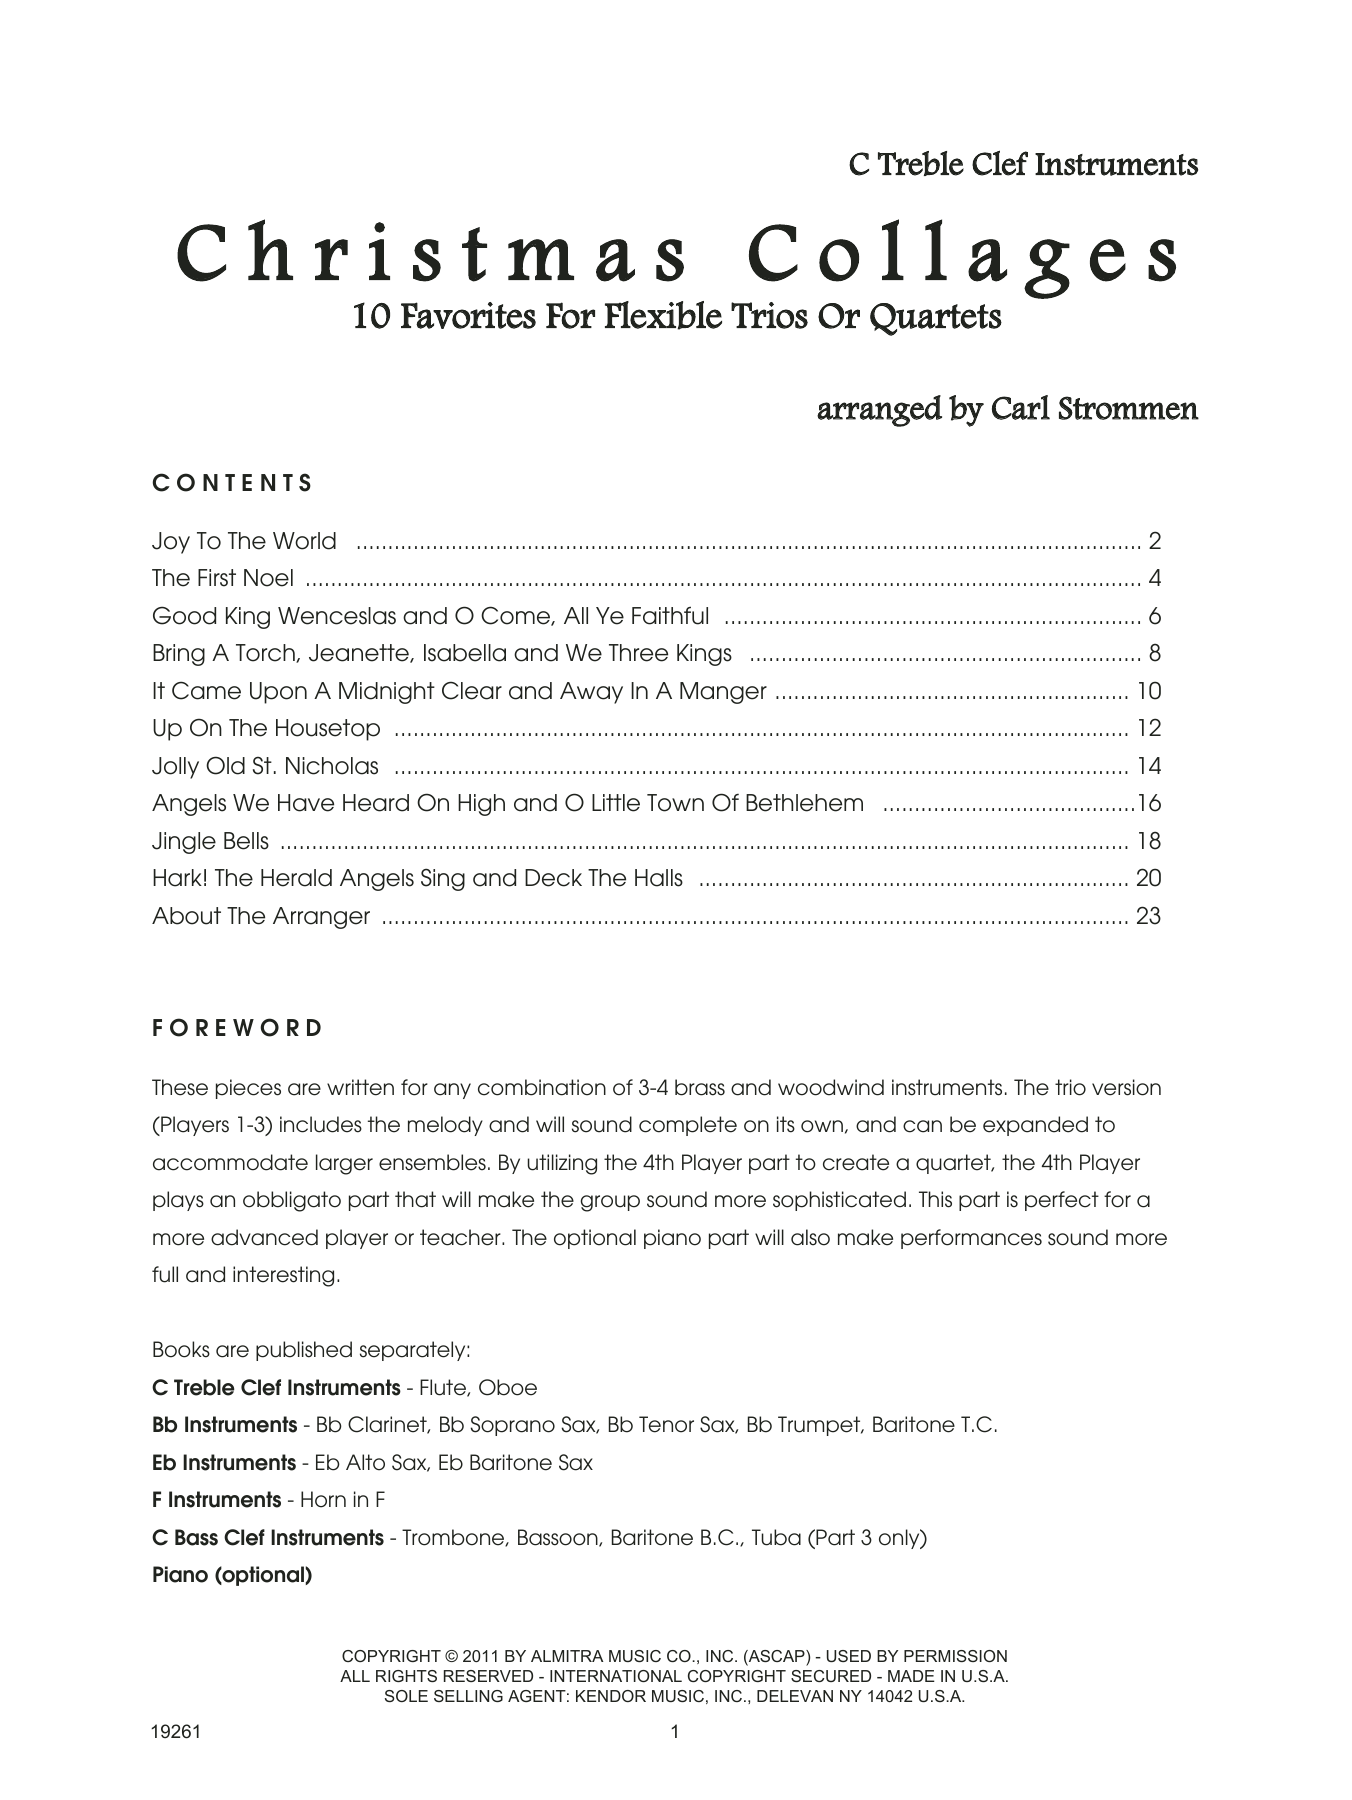 Download Strommen Christmas Collages - C Treble Clef Inst Sheet Music